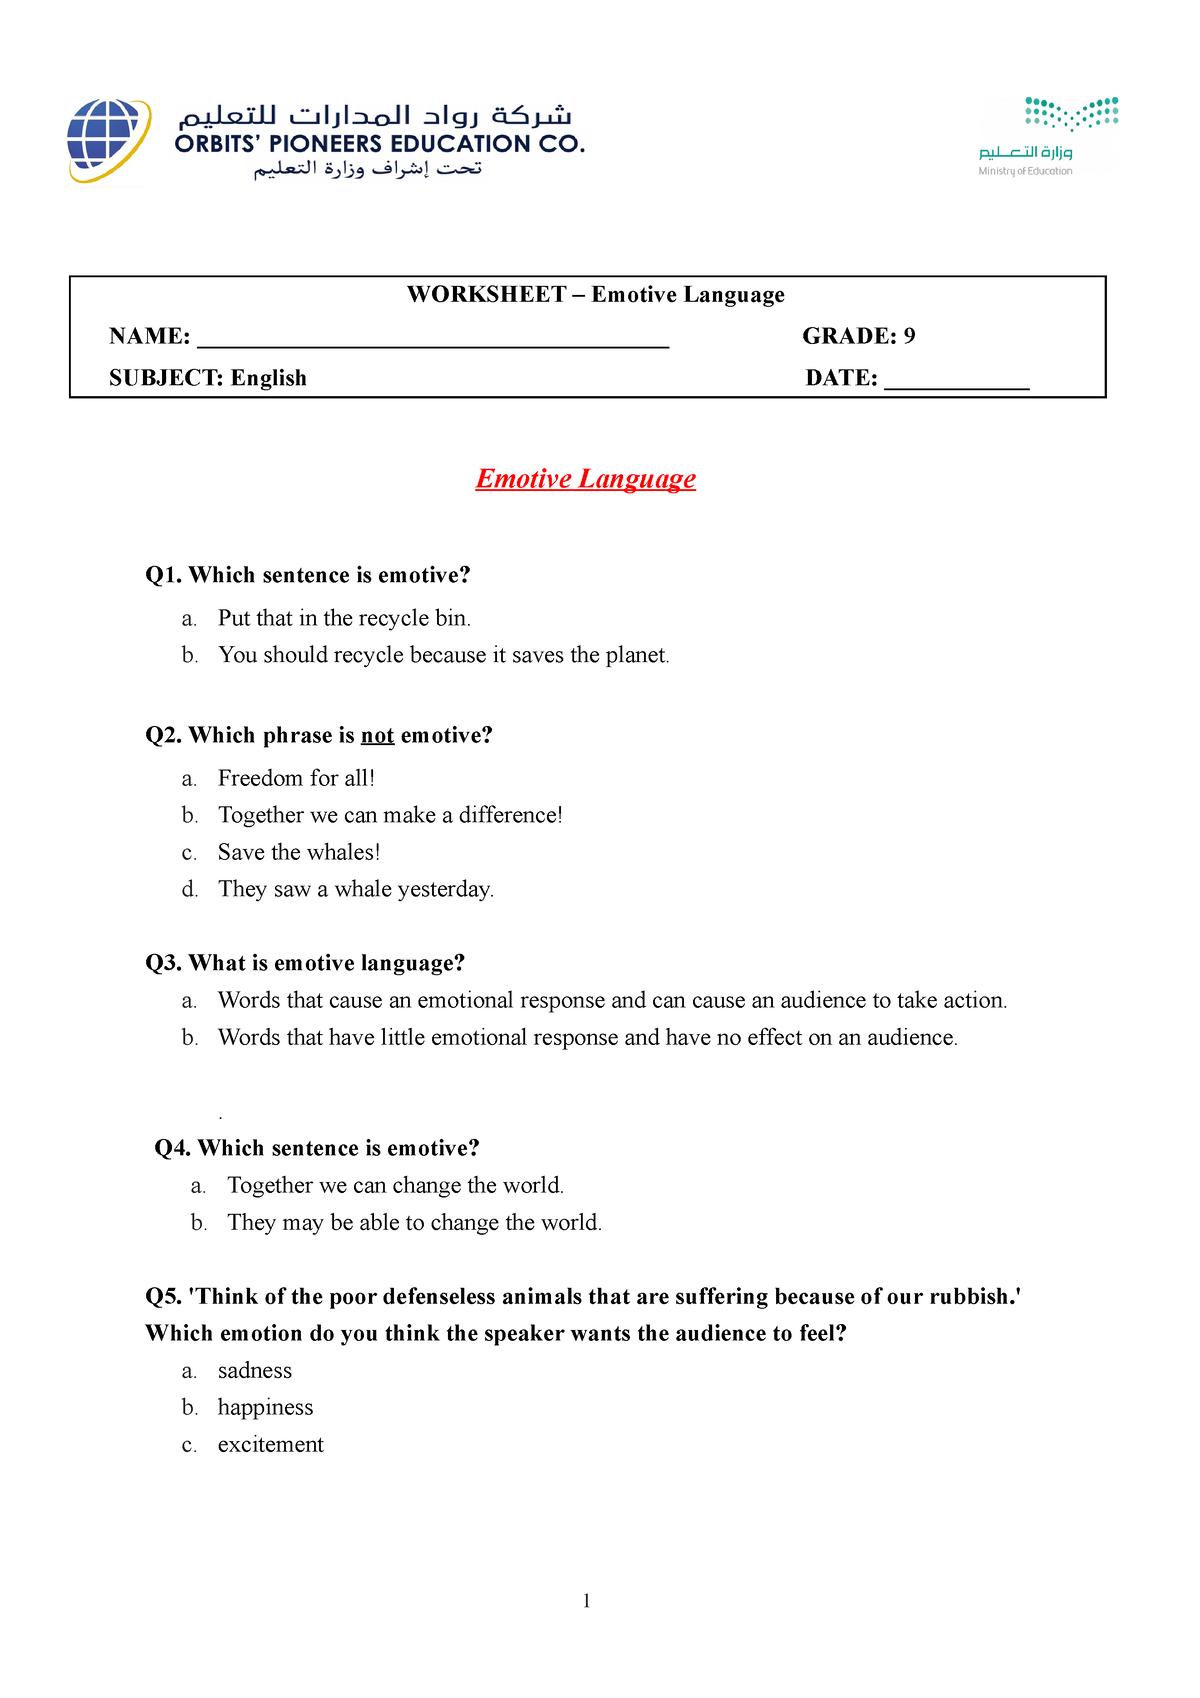 emotive-language-worksheet-grade-9-worksheet-emotive-language-name-studocu